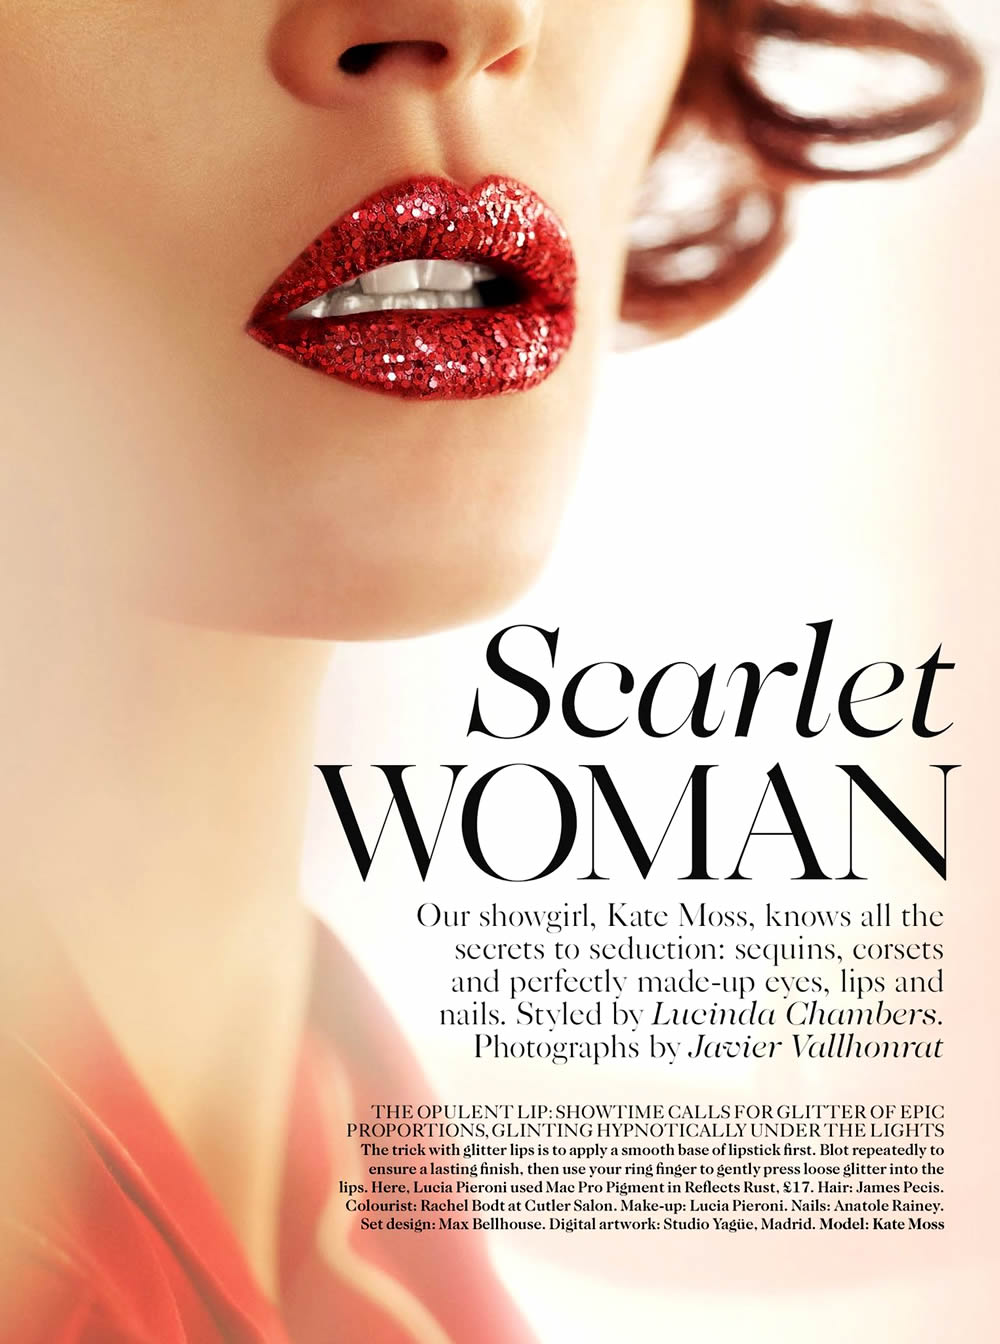 Kate Moss by Javier Vallhonrat for Vogue UK October 2013 (1)